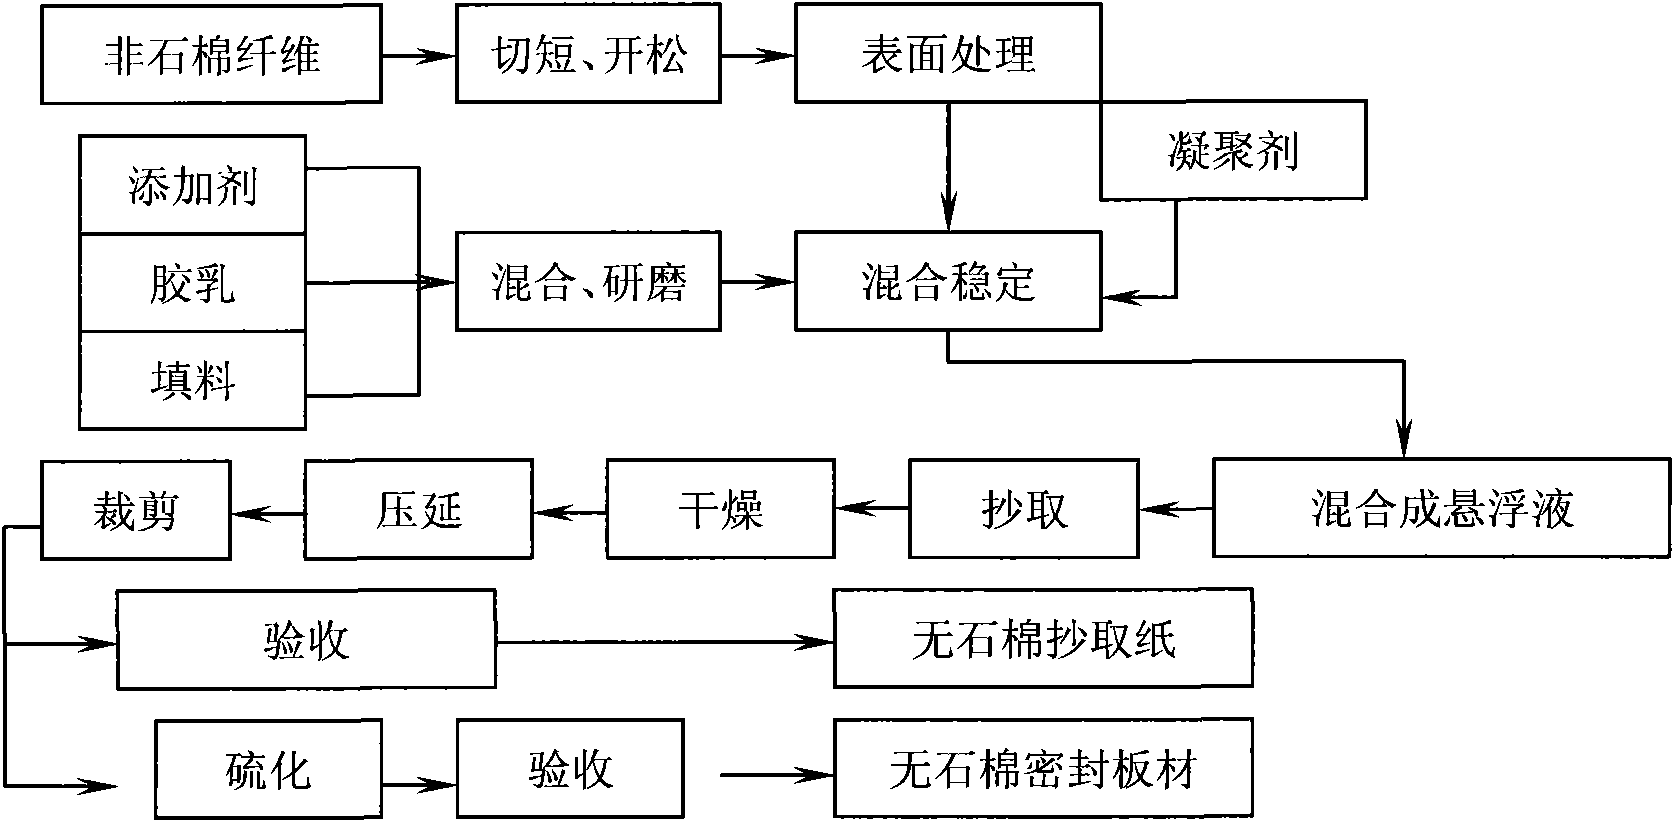 Method for preparing copy sheet used for sealing gasket